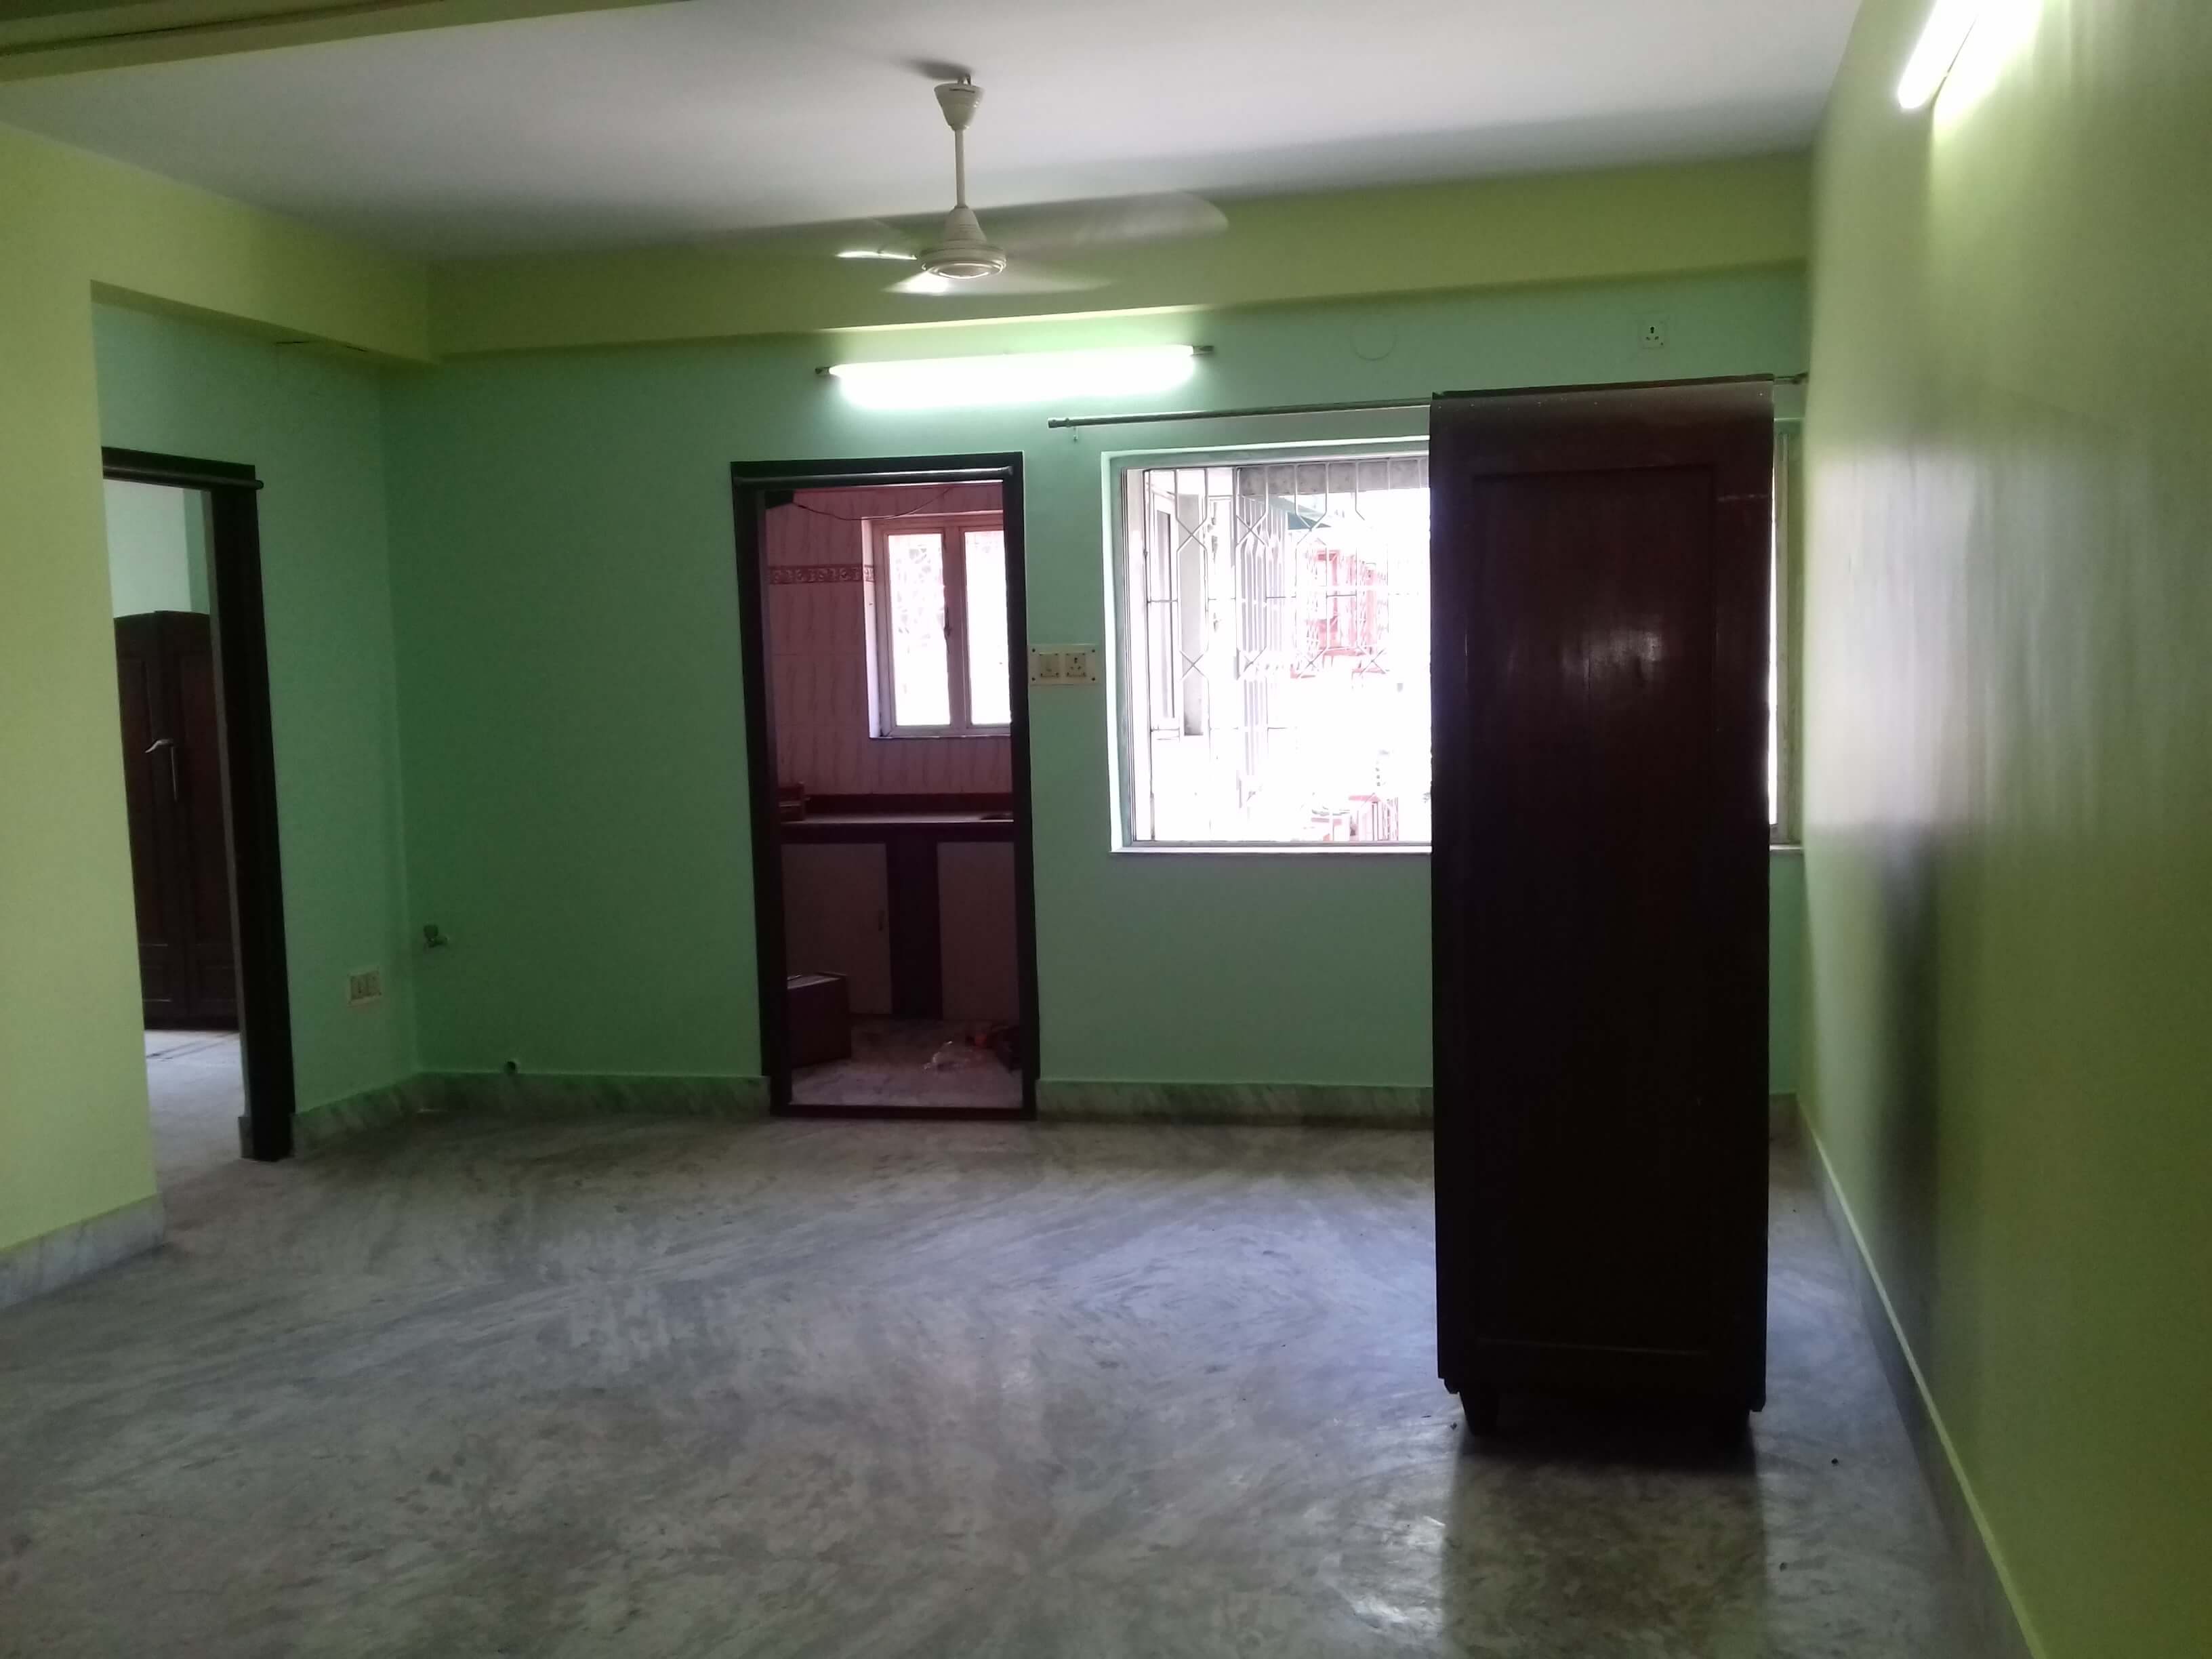 Flat For Rent in Tollygunge Kolkata (Id: 10932)